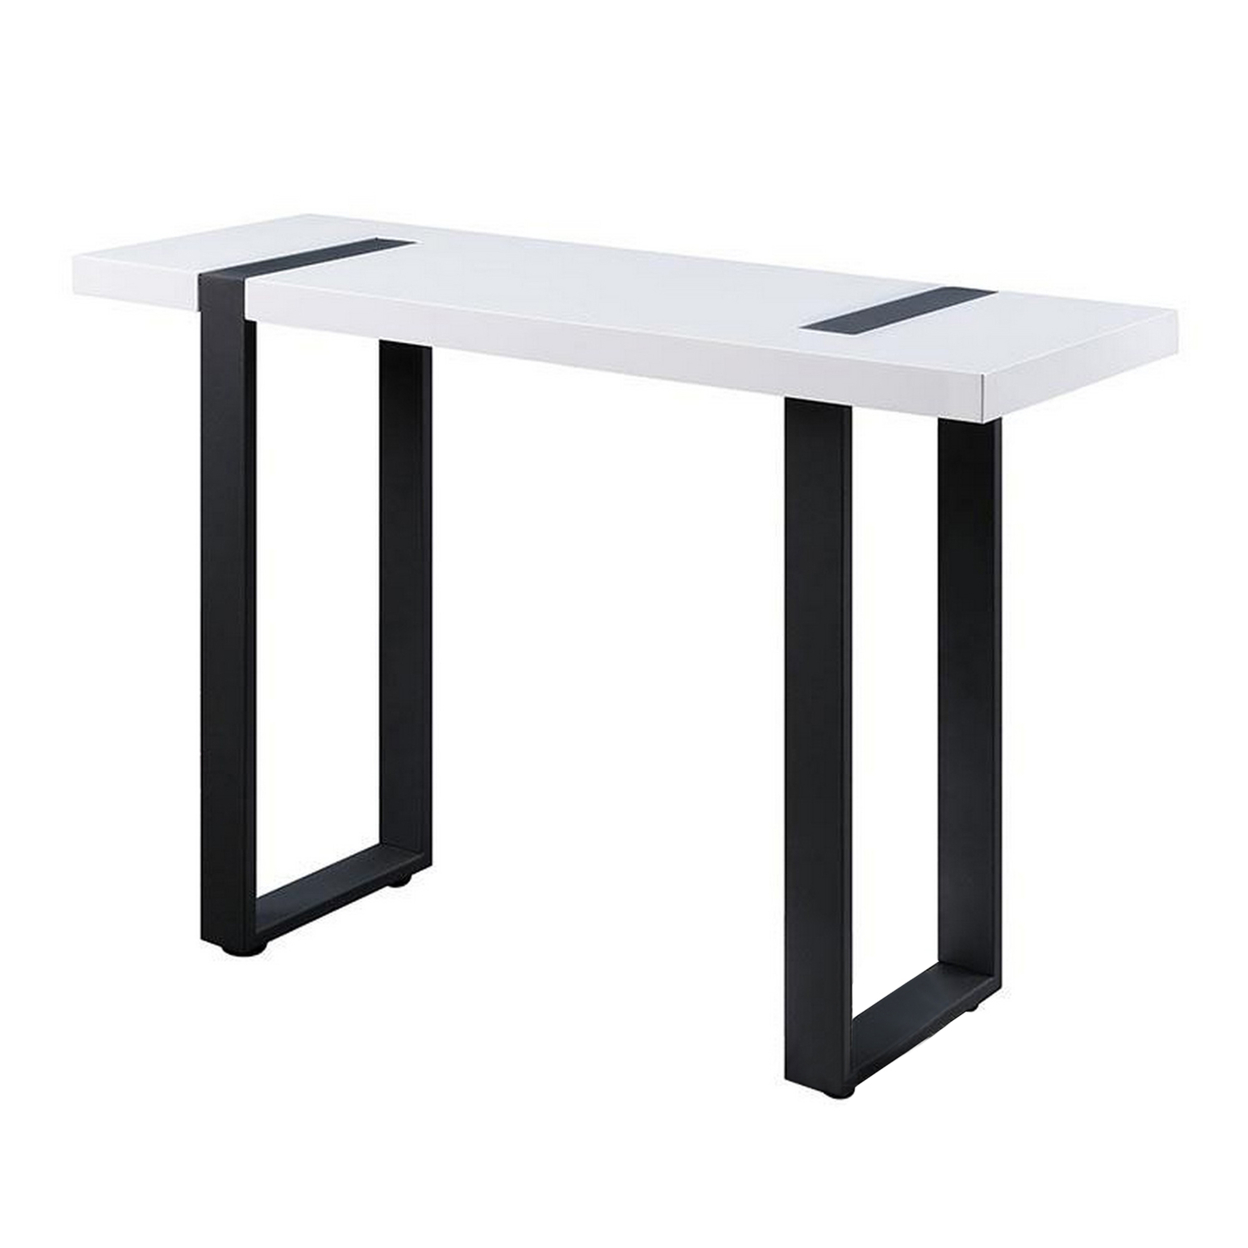 Two Tone Modern Sofa Table With Metal Legs, White And Black- Saltoro Sherpi